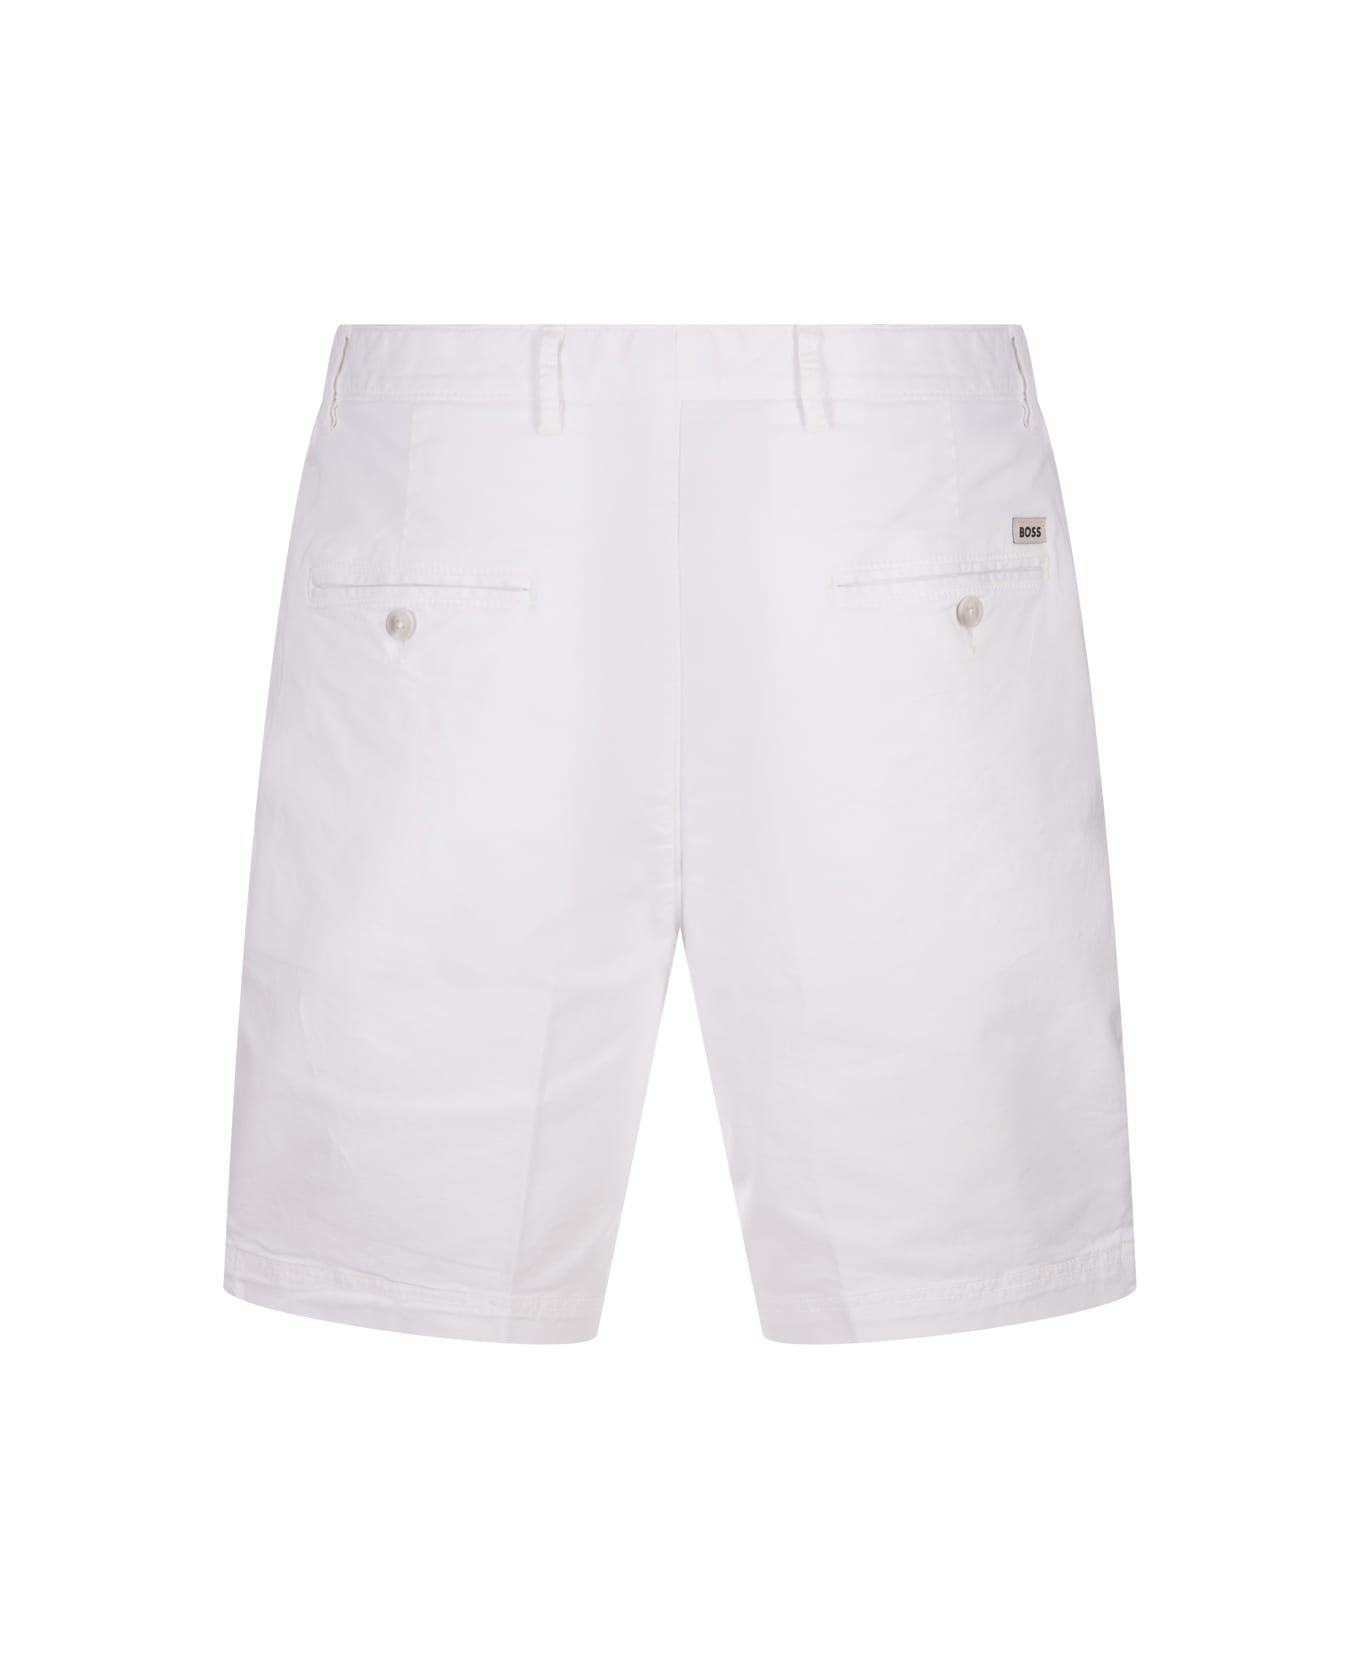 Hugo Boss White Stretch Cotton Twill Bermuda Shorts - White